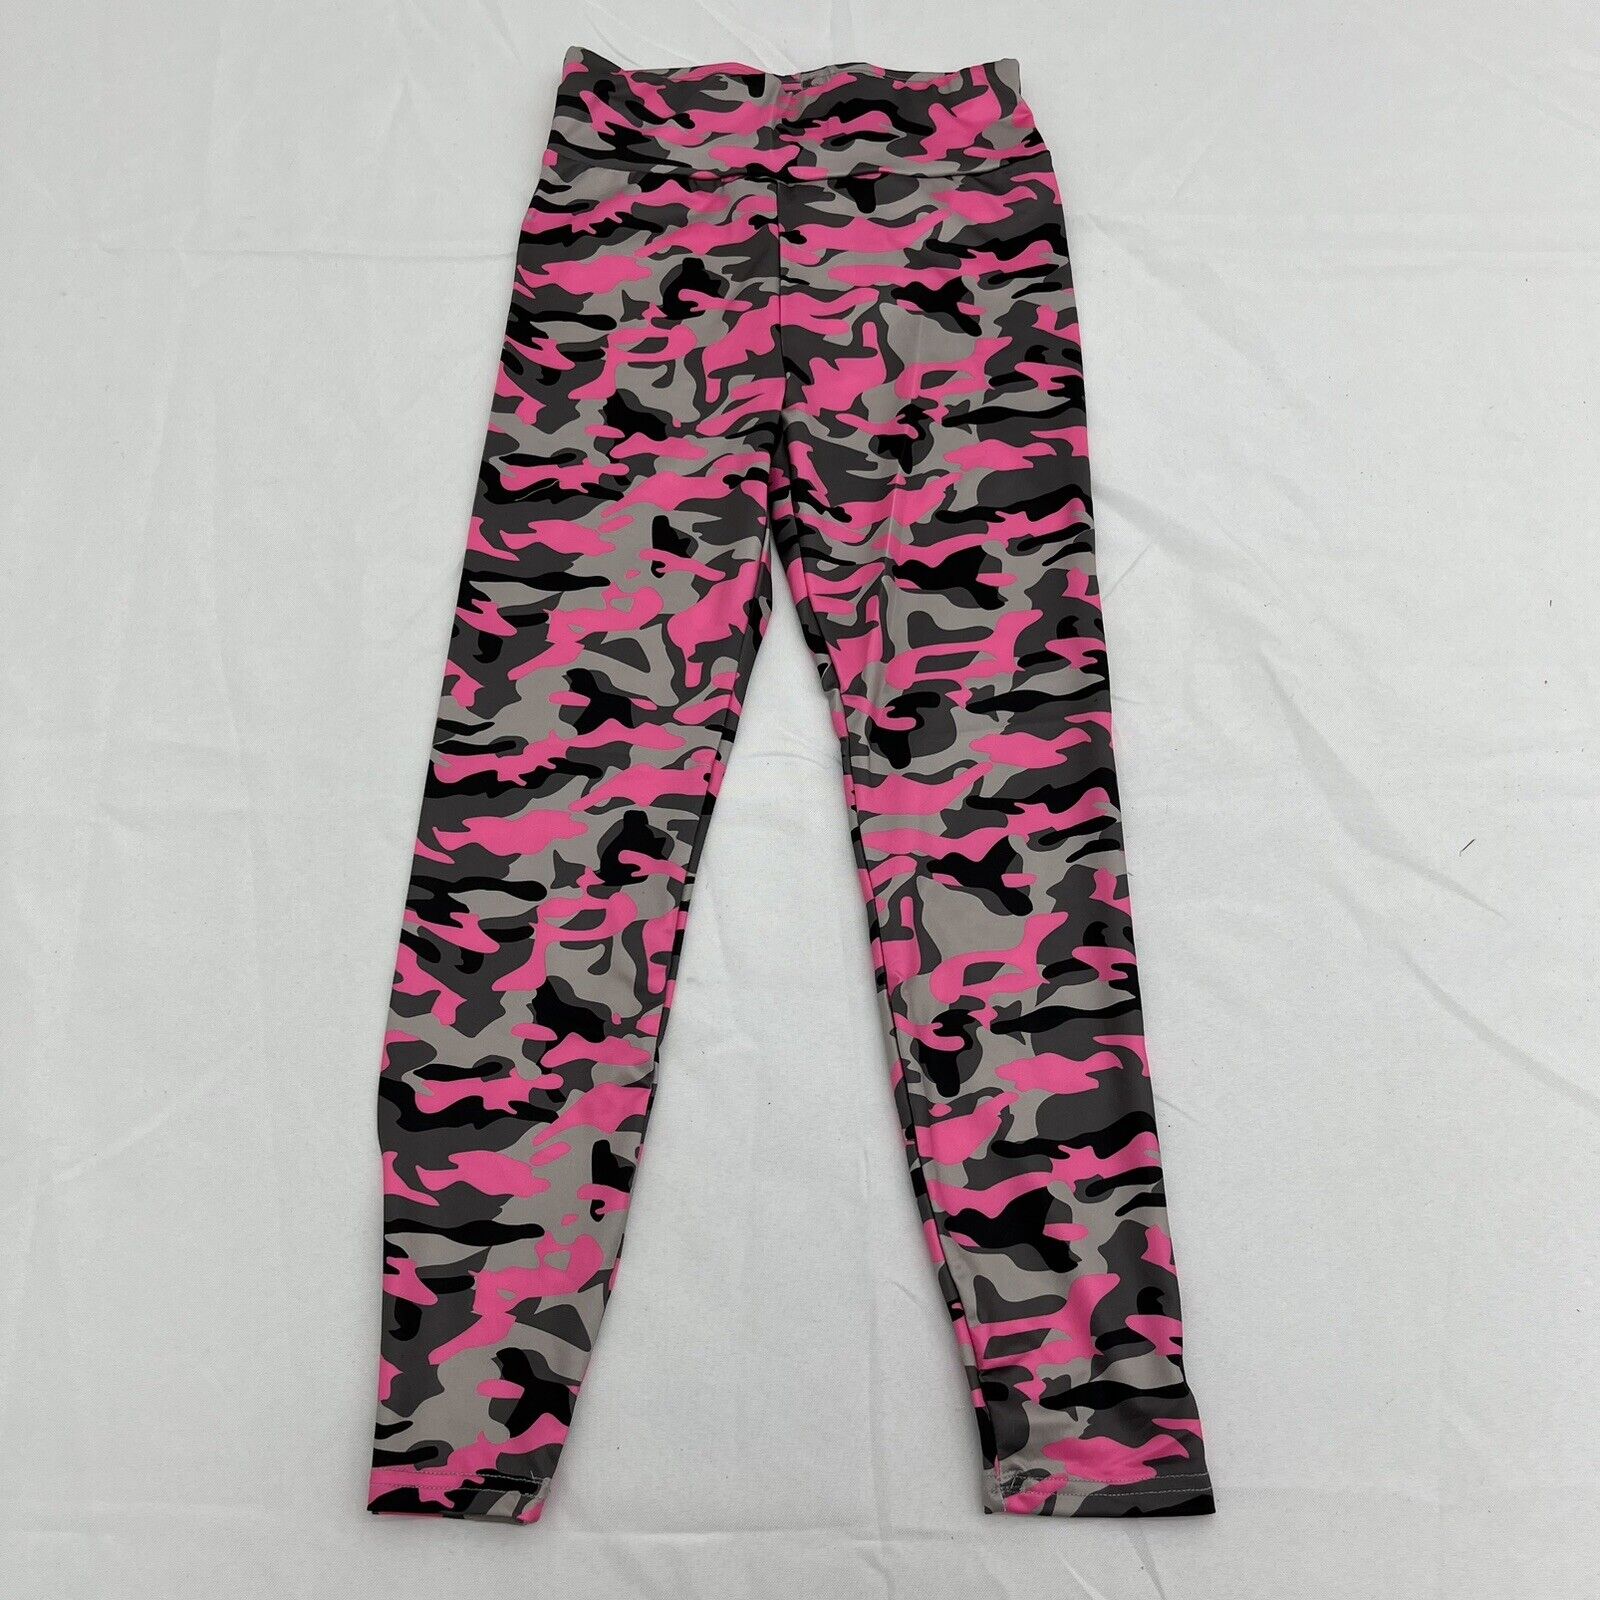 Shein Kids Pink Camo Leggings Girls Size 9Y NEW - beyond exchange